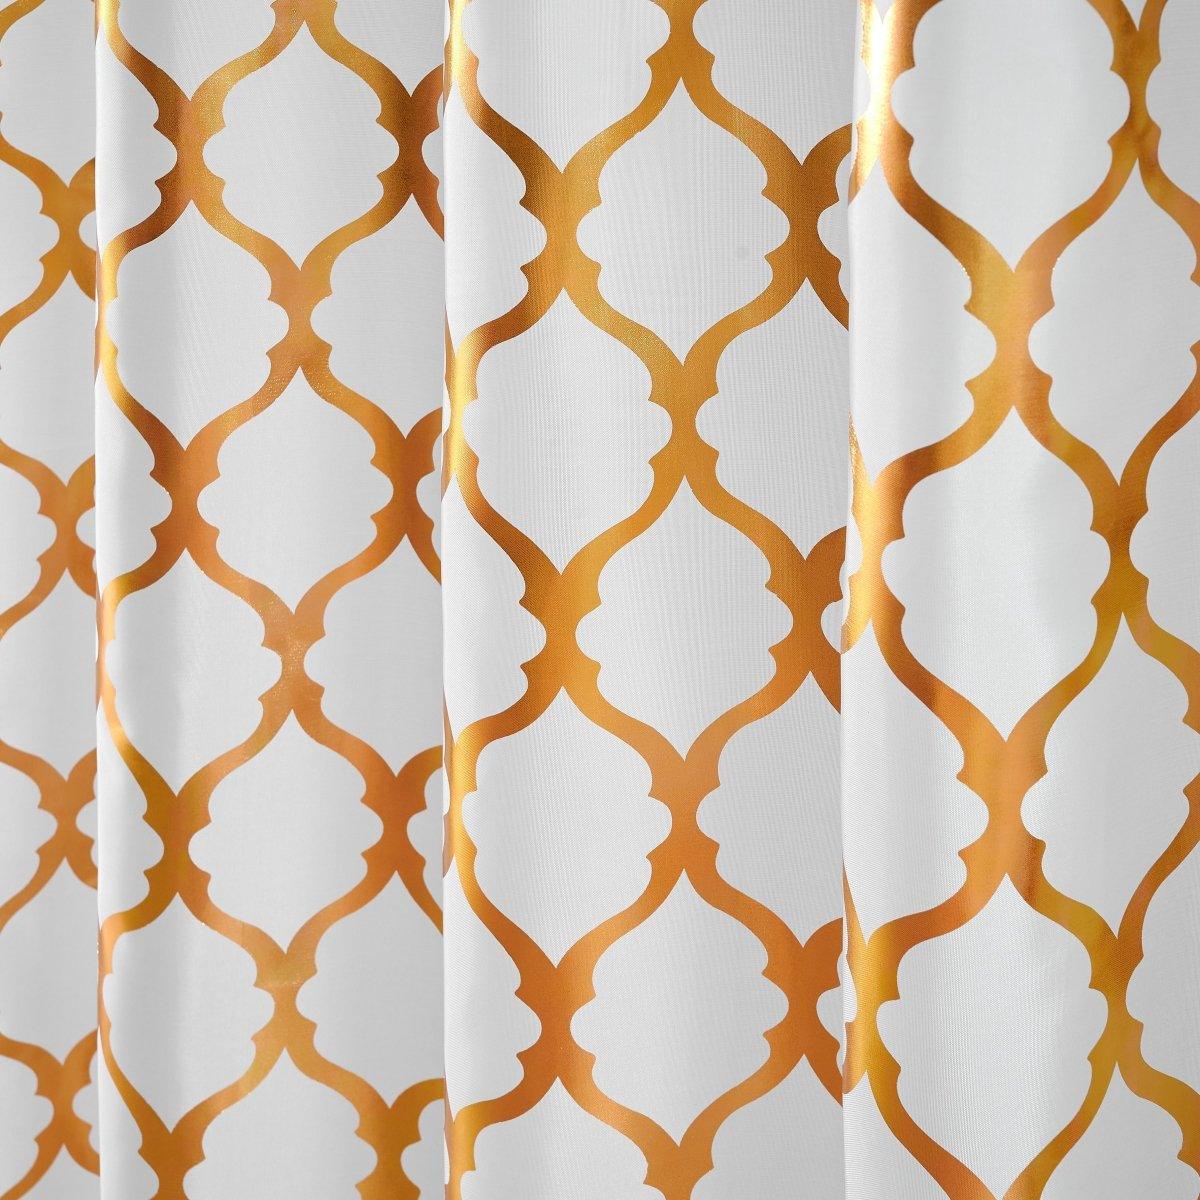 14pc Hooks with Rug Polyester Shower Curtain Set - Spirit Linen | Gray